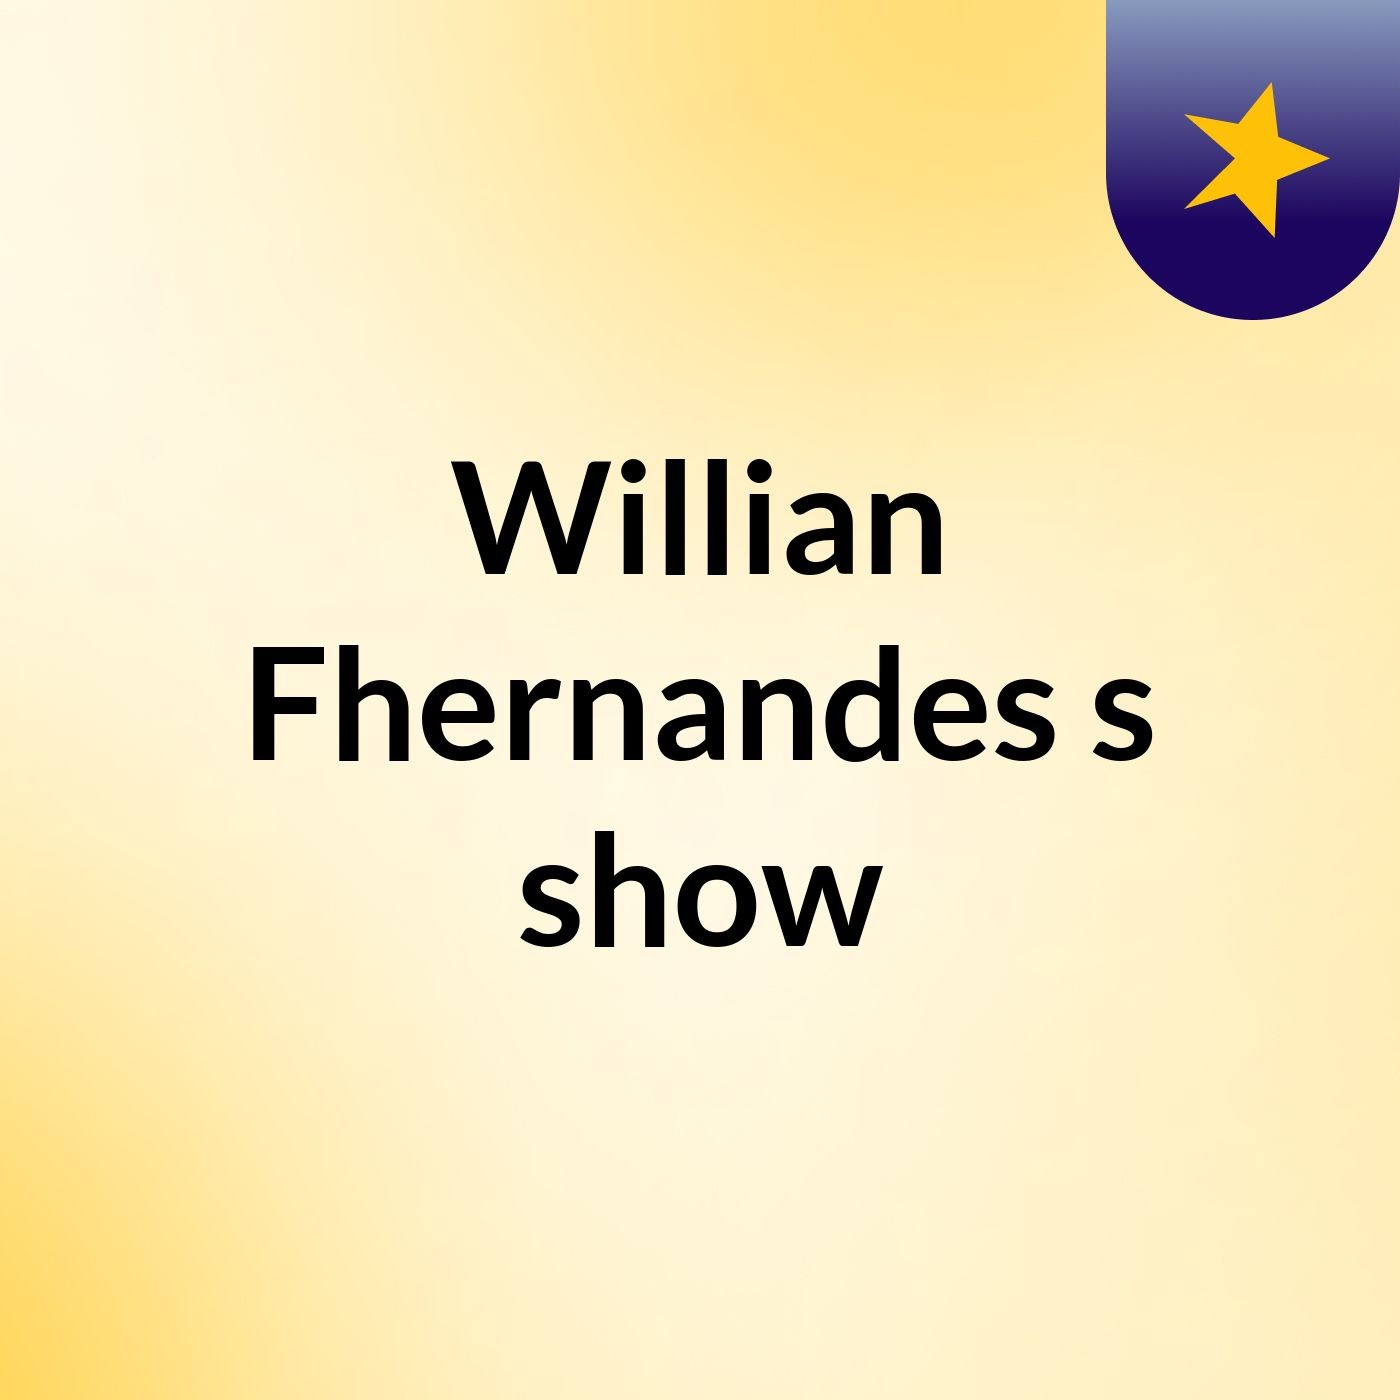 Willian Fhernandes's show